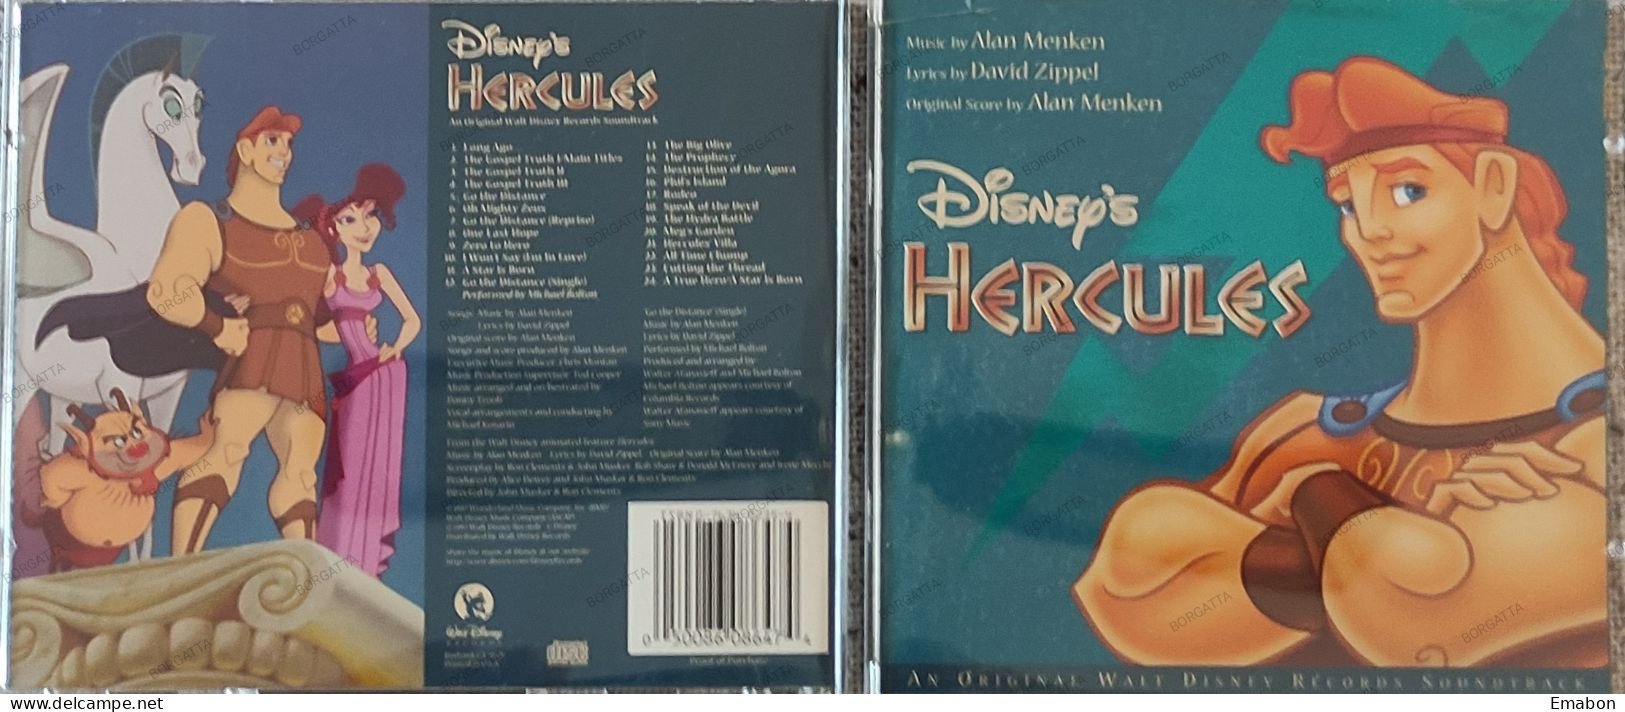 BORGATTA - FILM MUSIC - Cd ALAN MENKEN - HERCULES - WALT DISNEY RECORDS 1997 - USATO In Buono Stato - Filmmusik